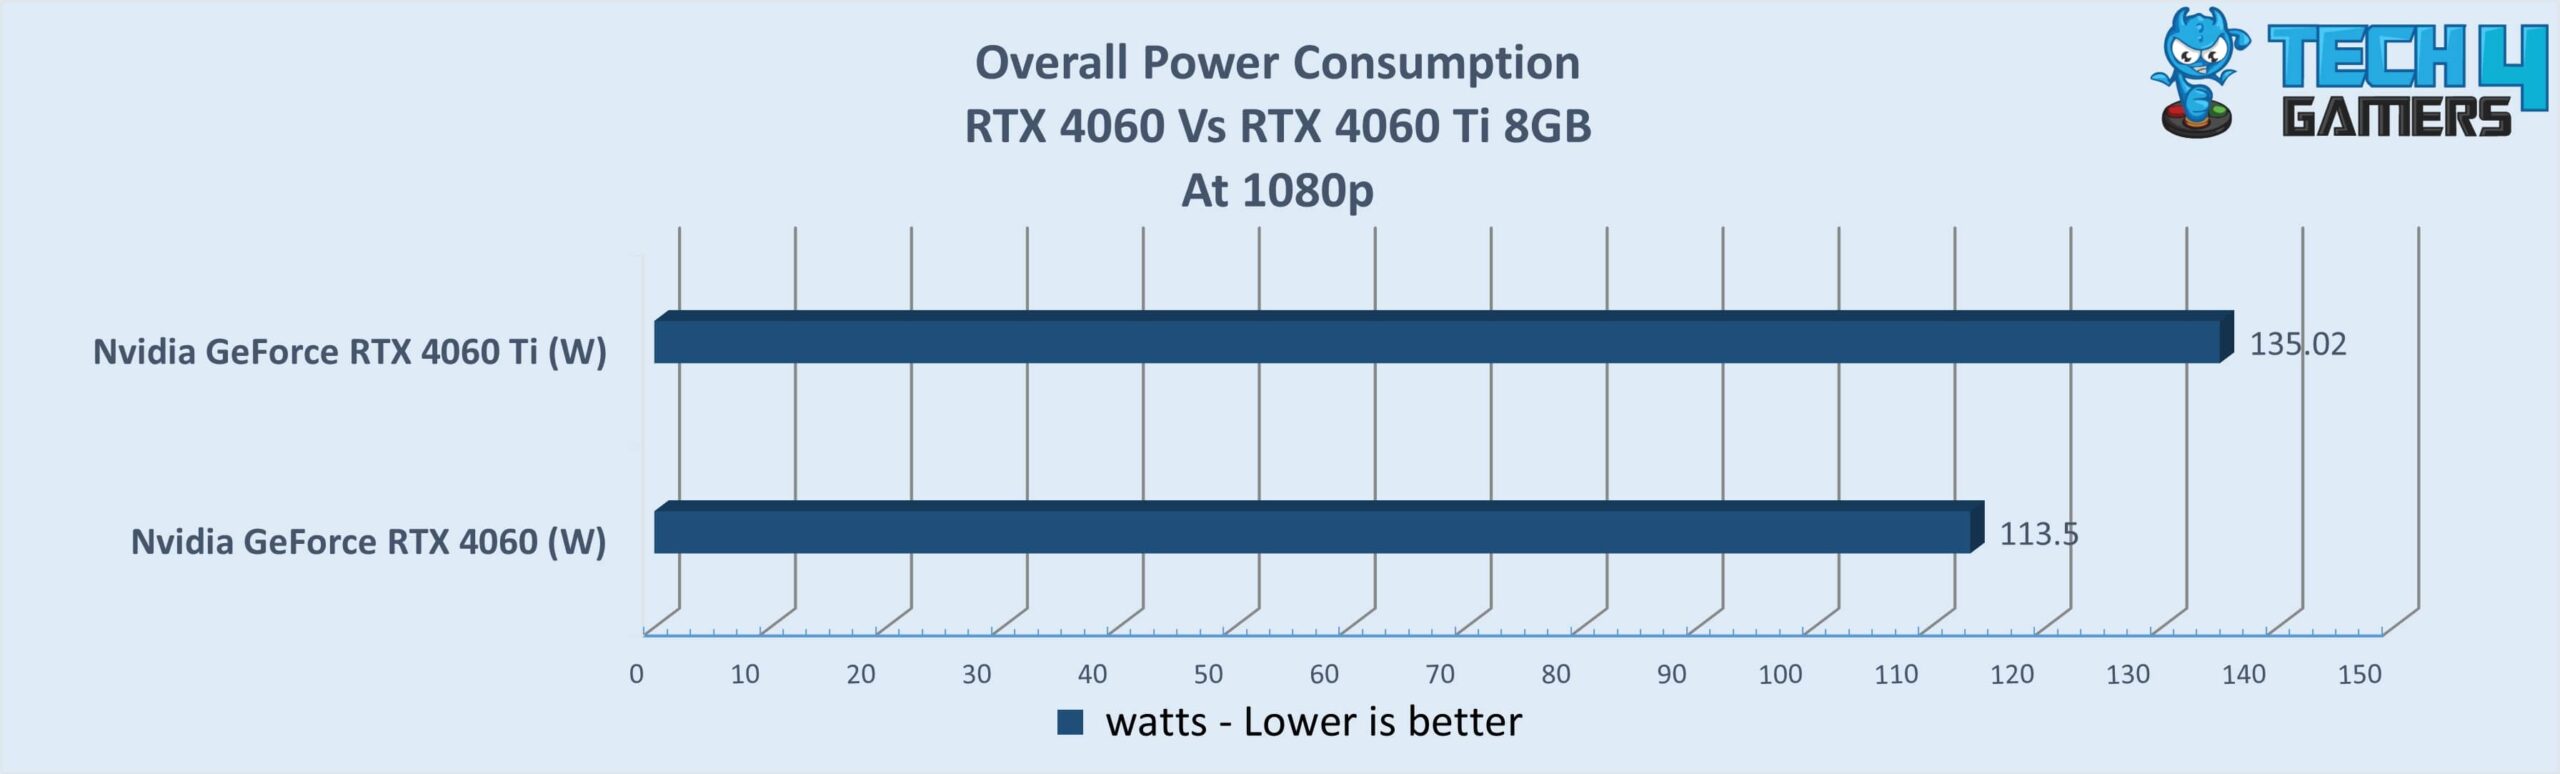 Average power consumption